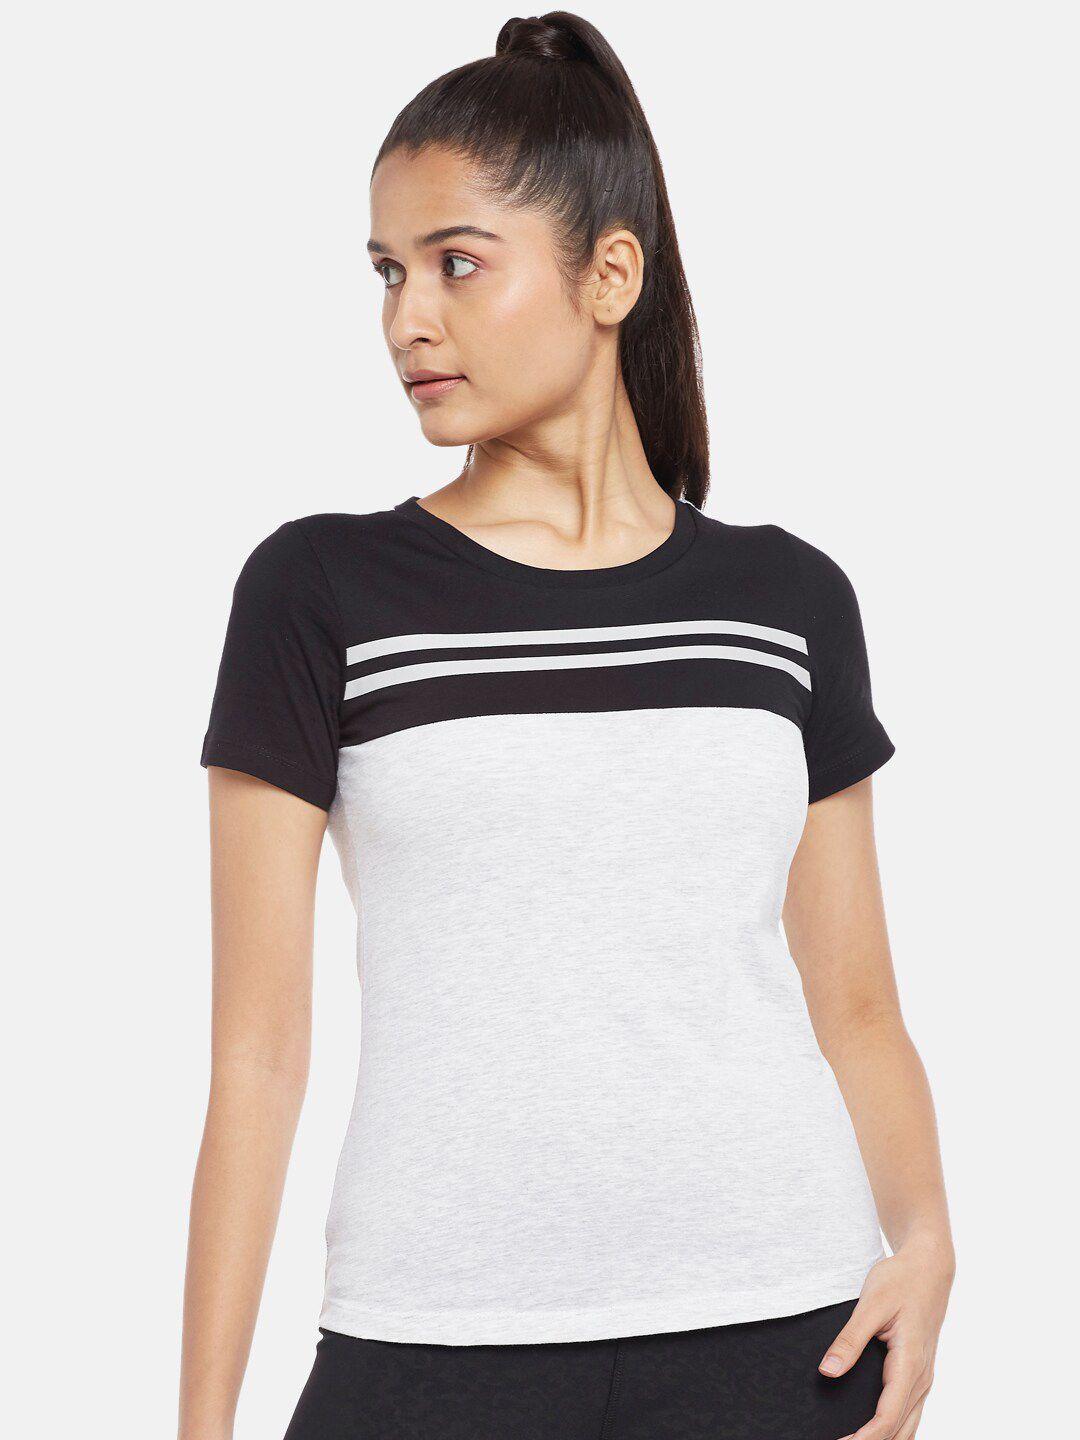 ajile by pantaloons women black & white colourblocked t-shirt